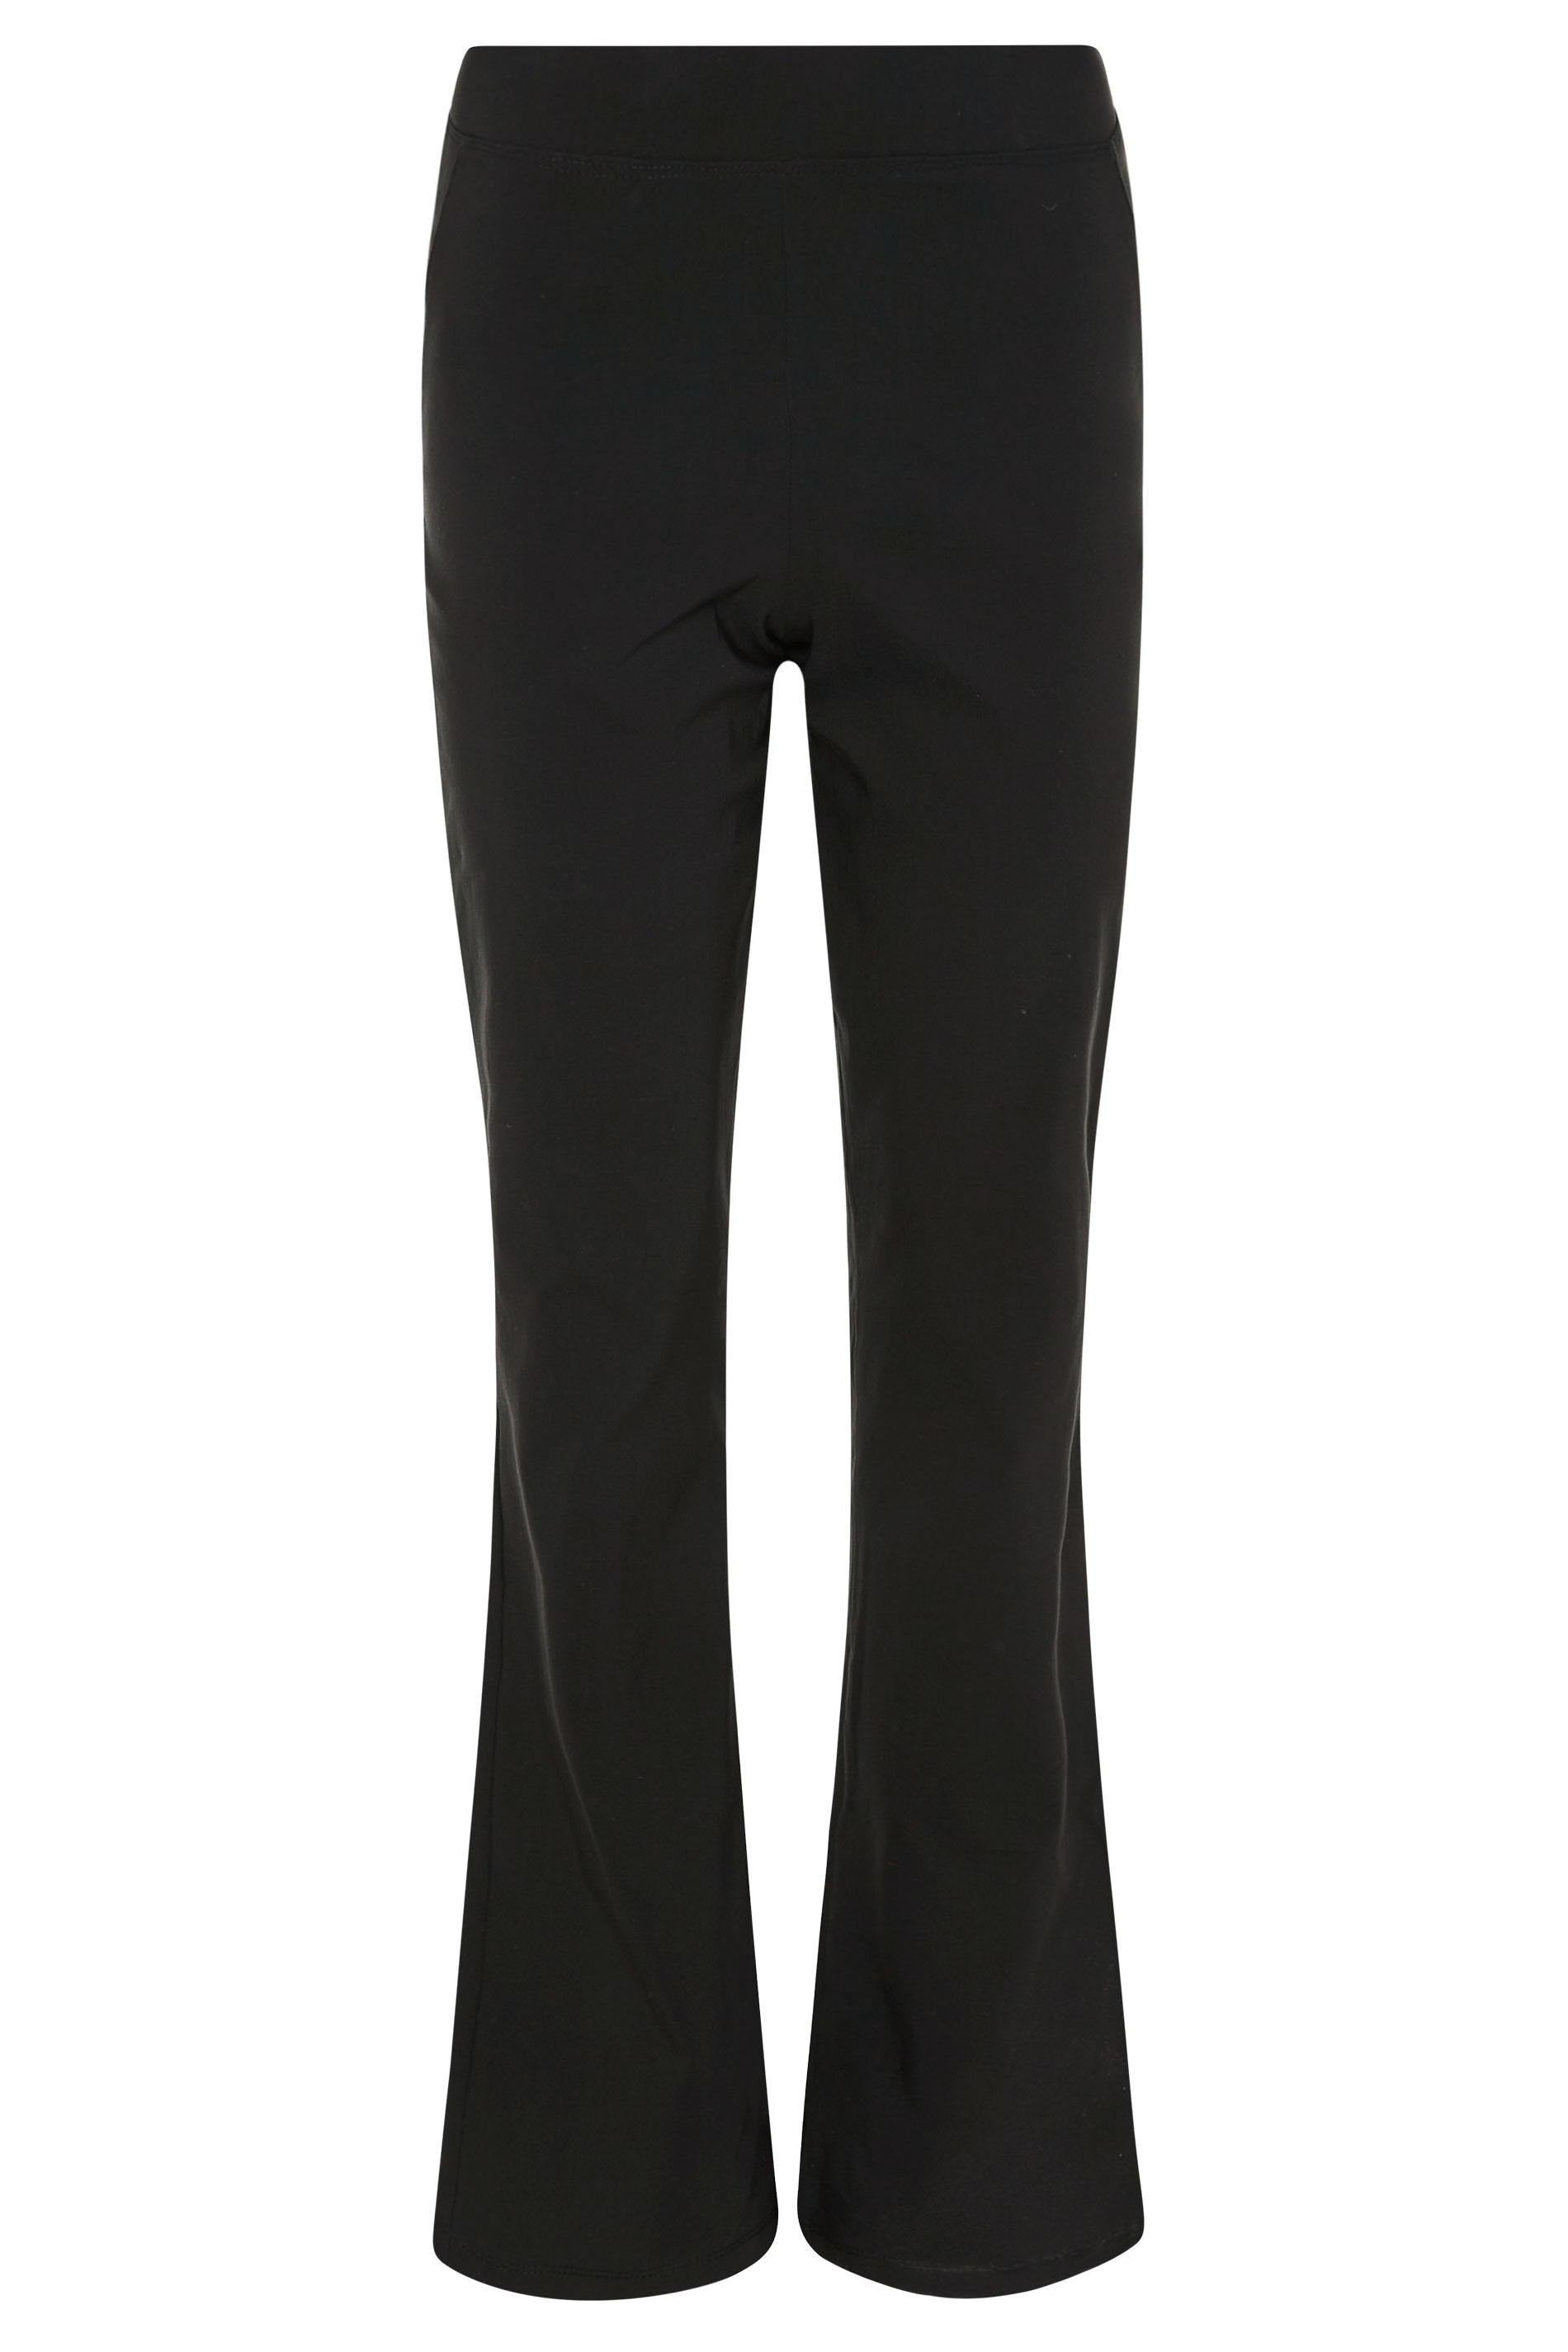 Women's Black Bootcut Trousers | Very.co.uk